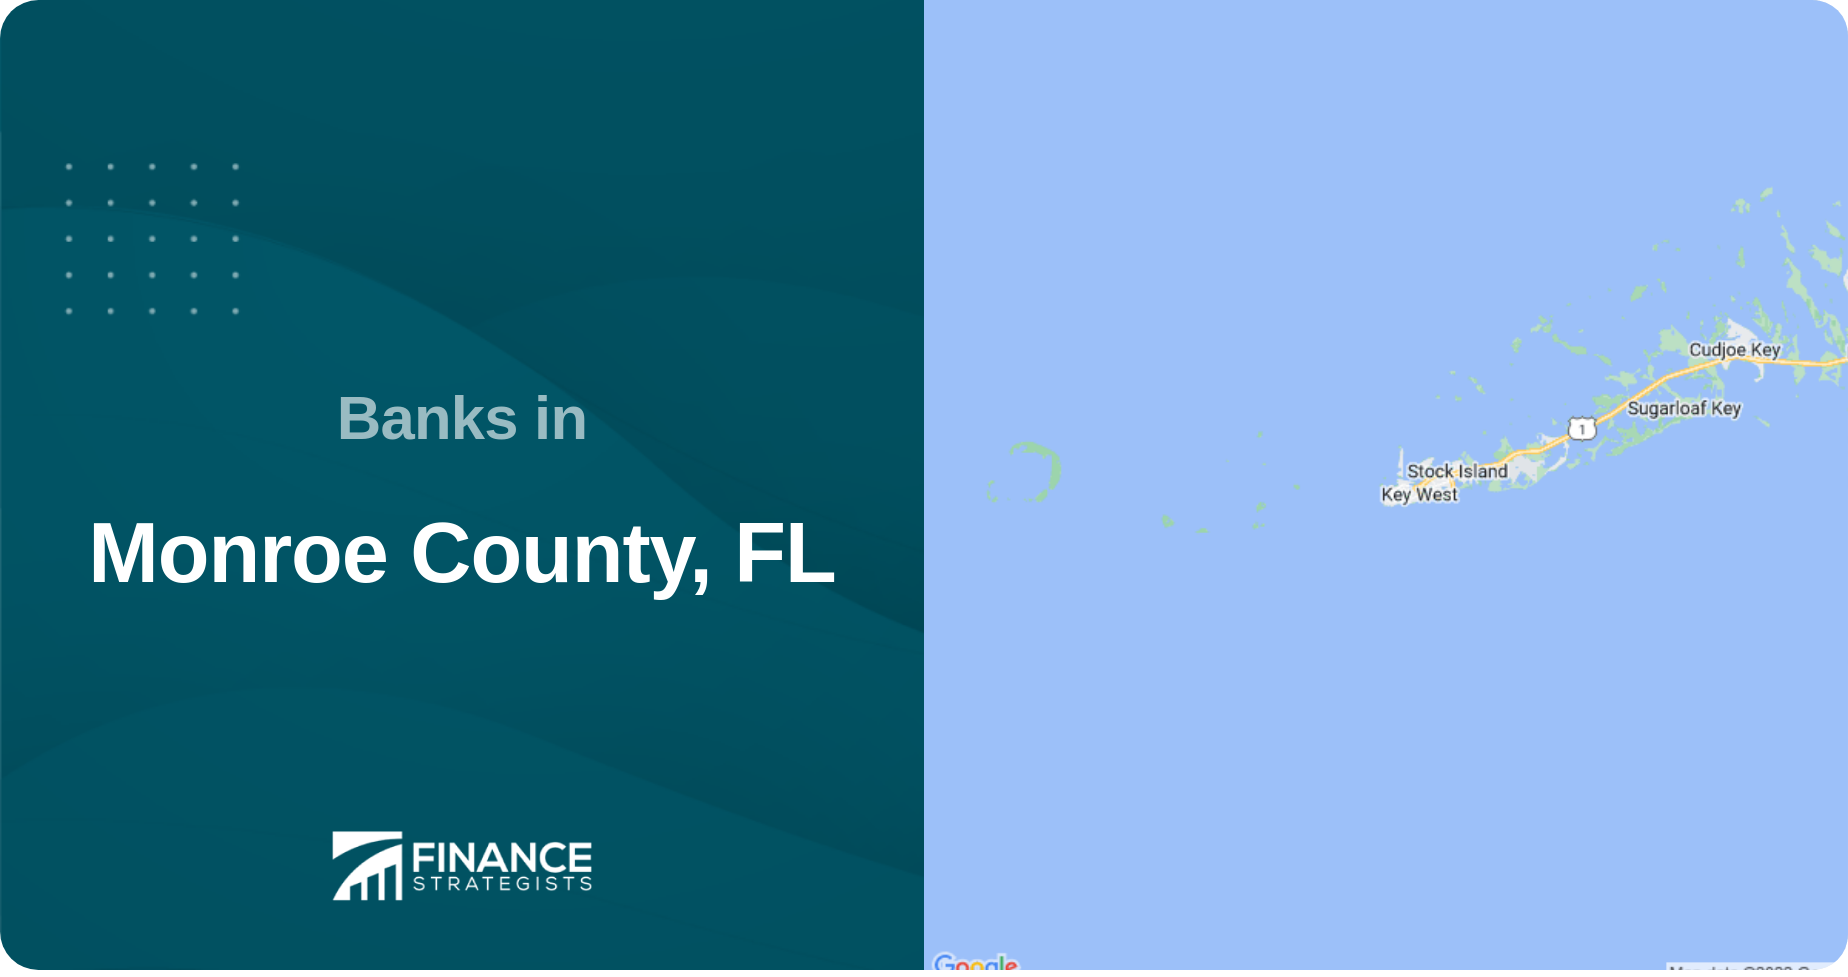 Banks in Monroe County, FL